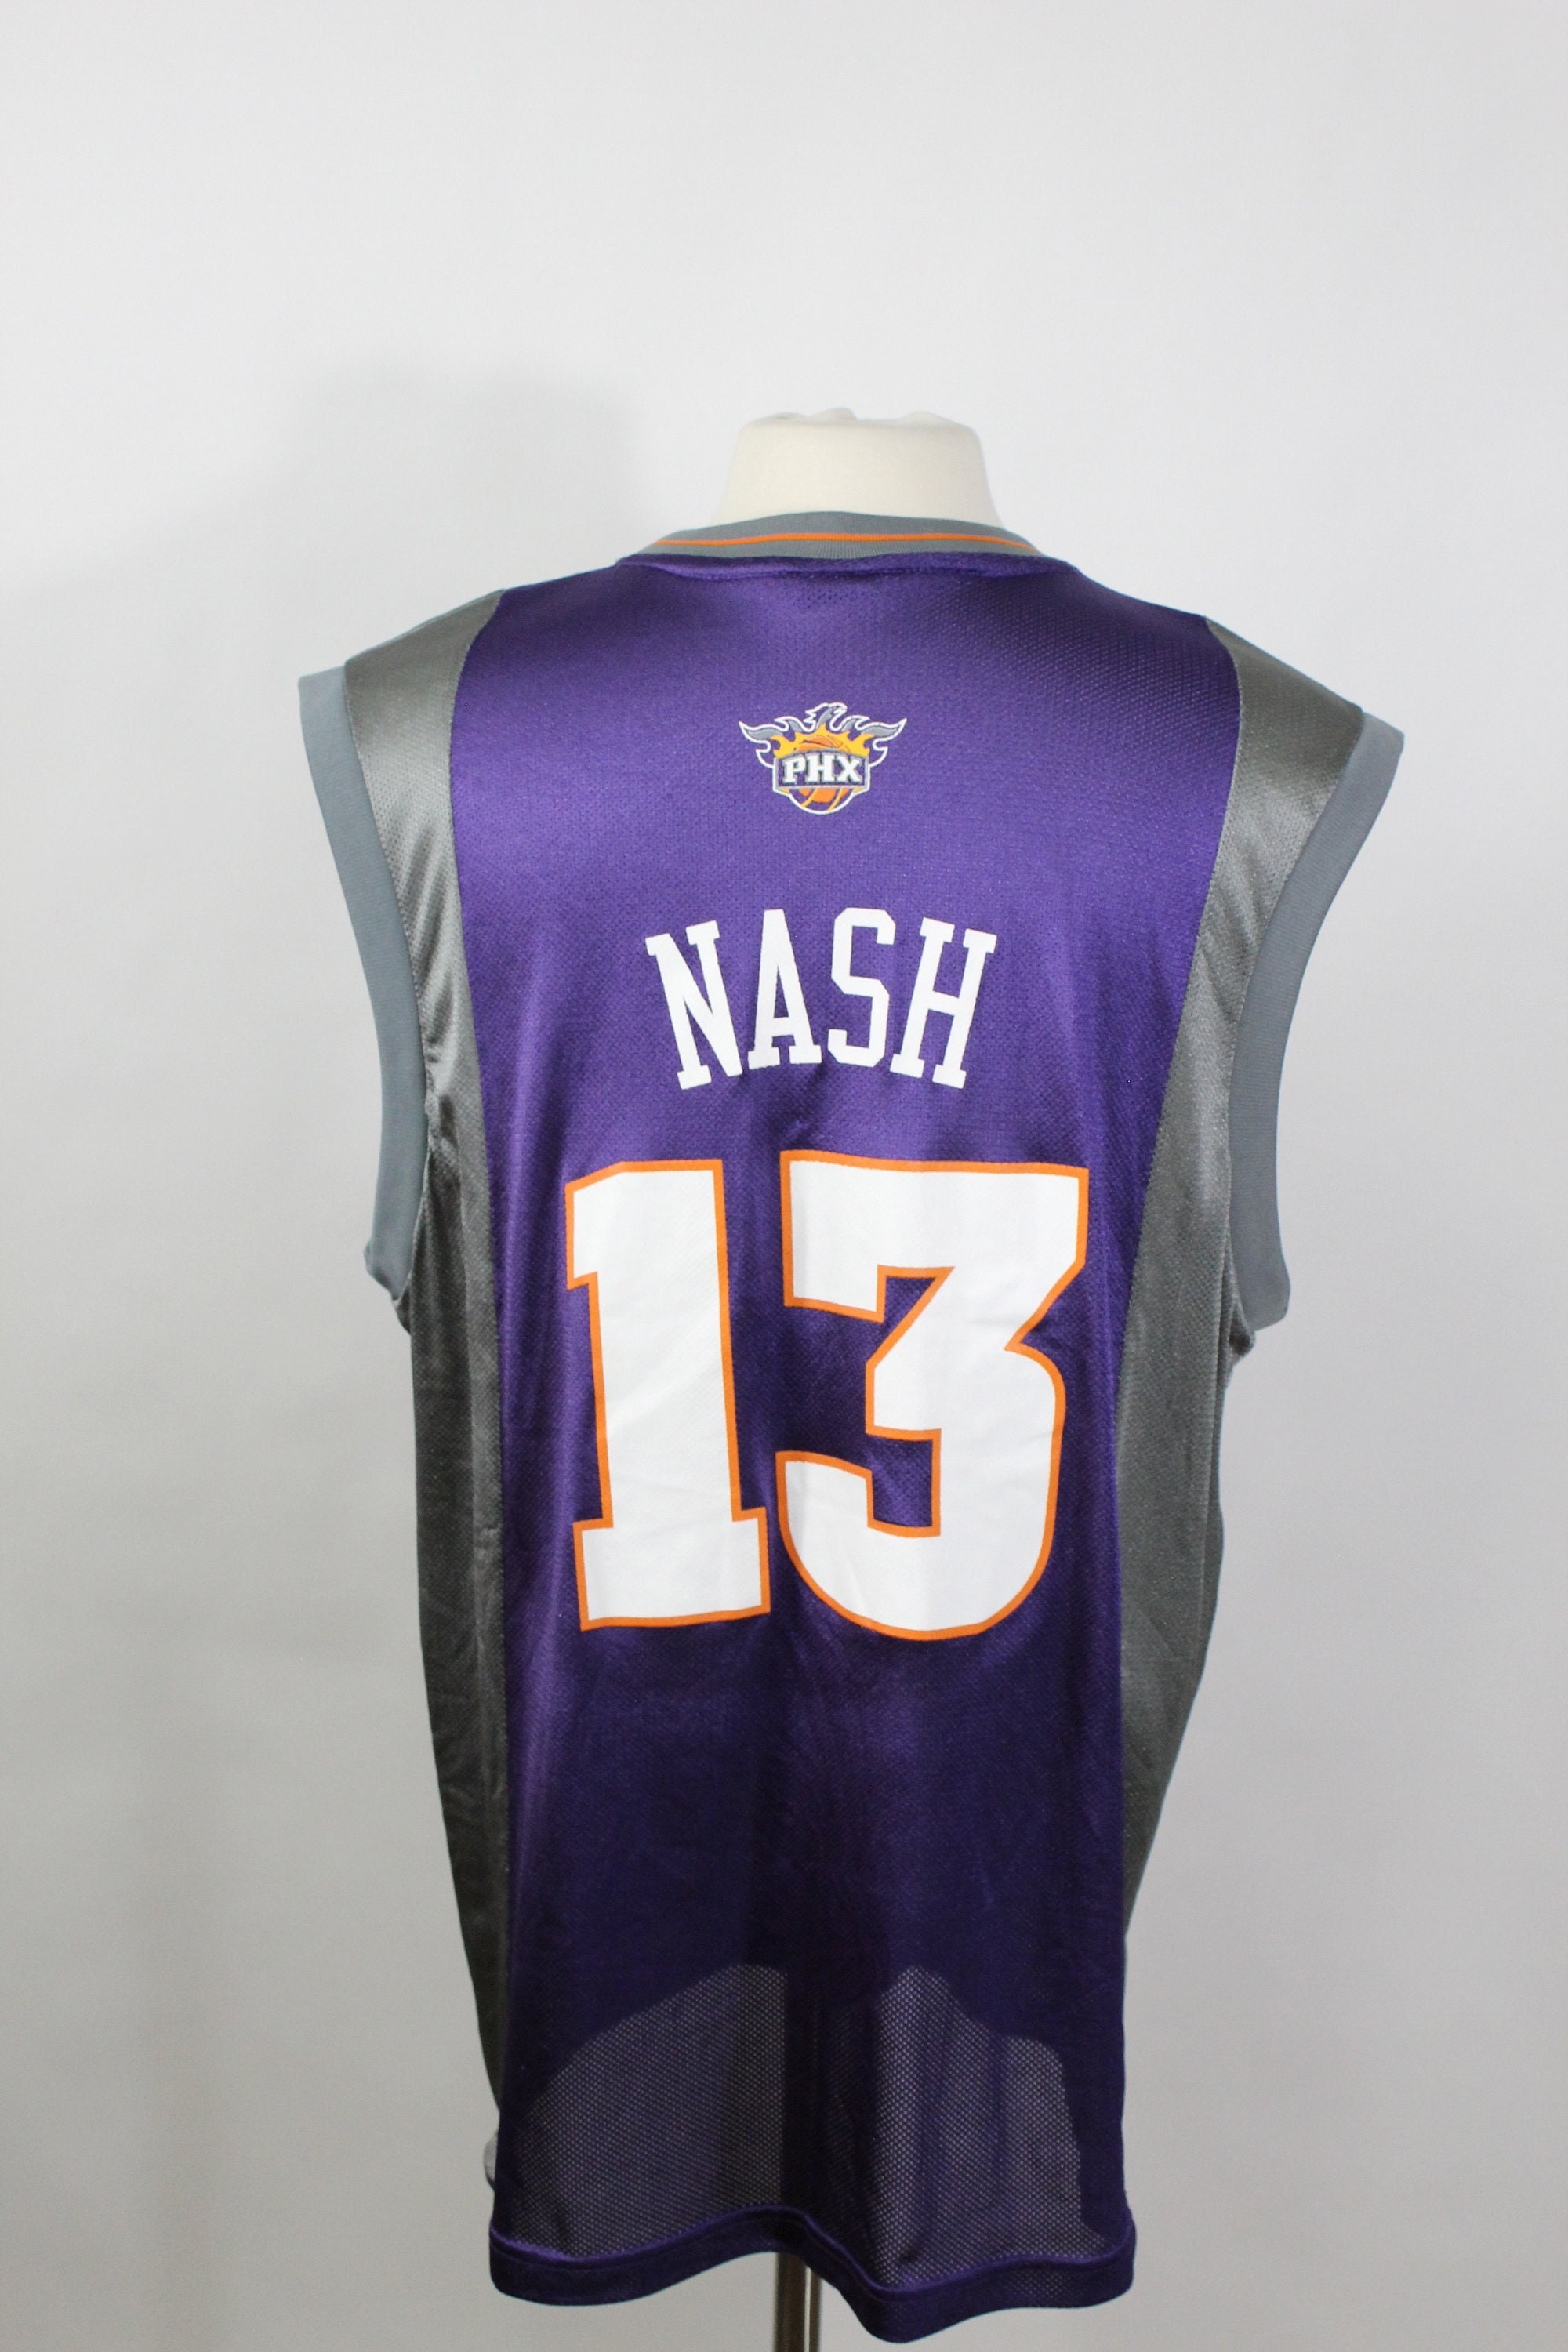 Phoenix Suns Adidas NBA Authentics #13 Steve Nash Jersey - Size